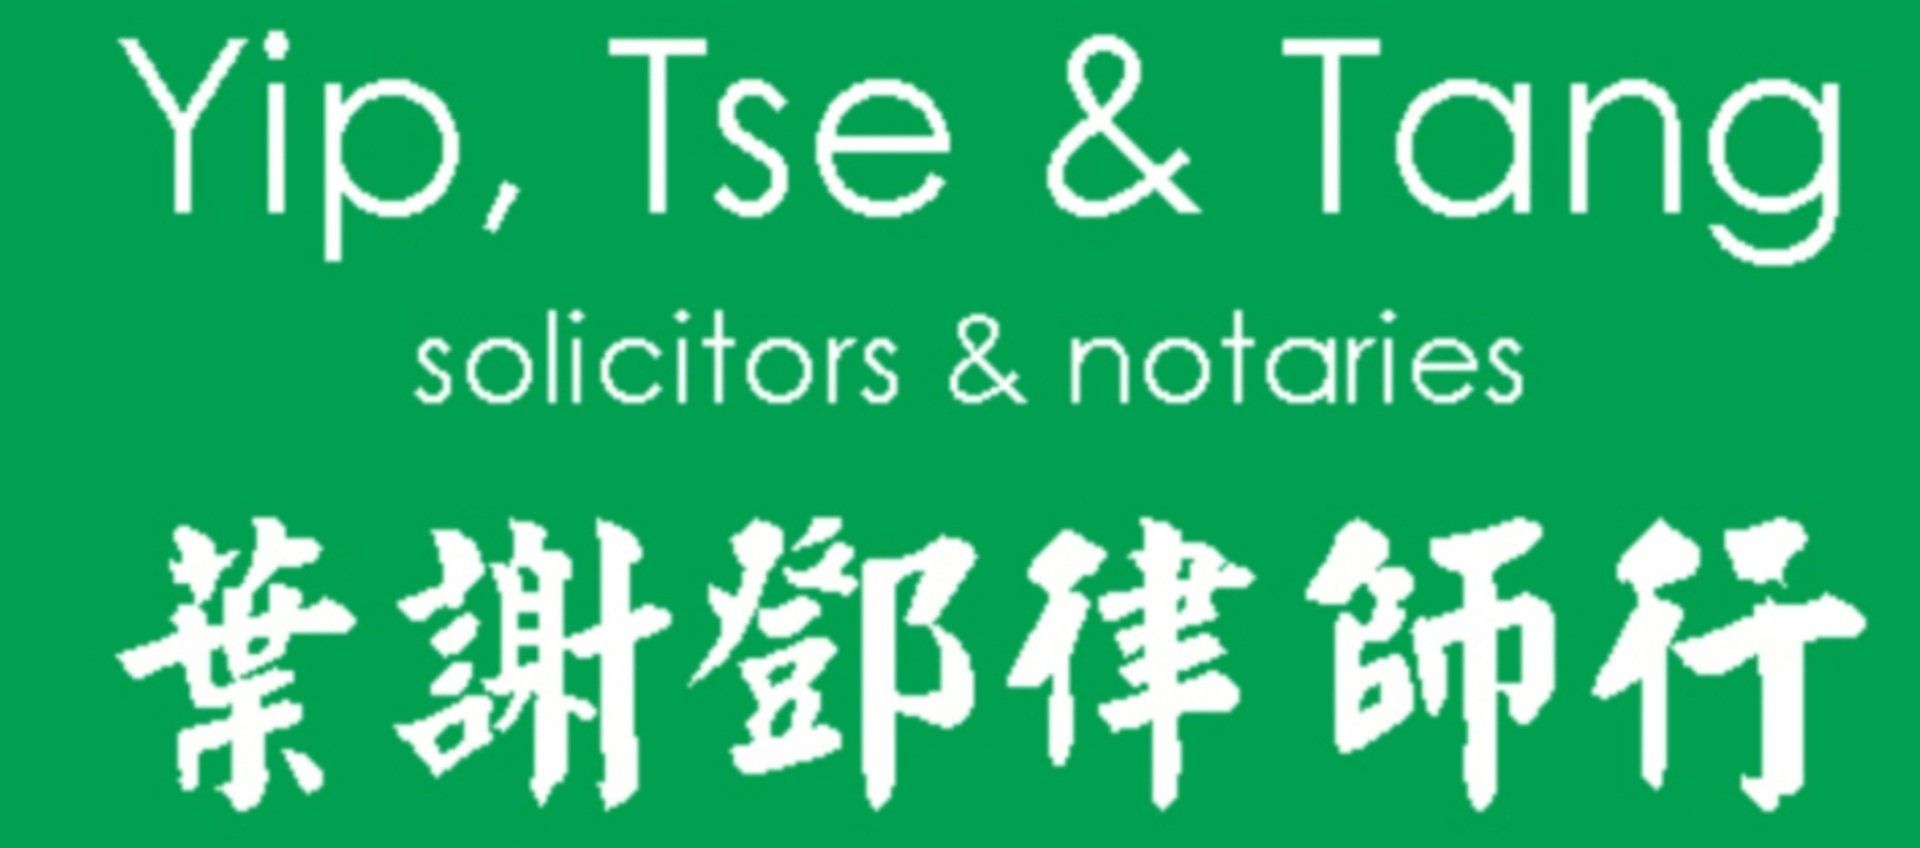 Yip Tse & Tang divorce lawyers logo